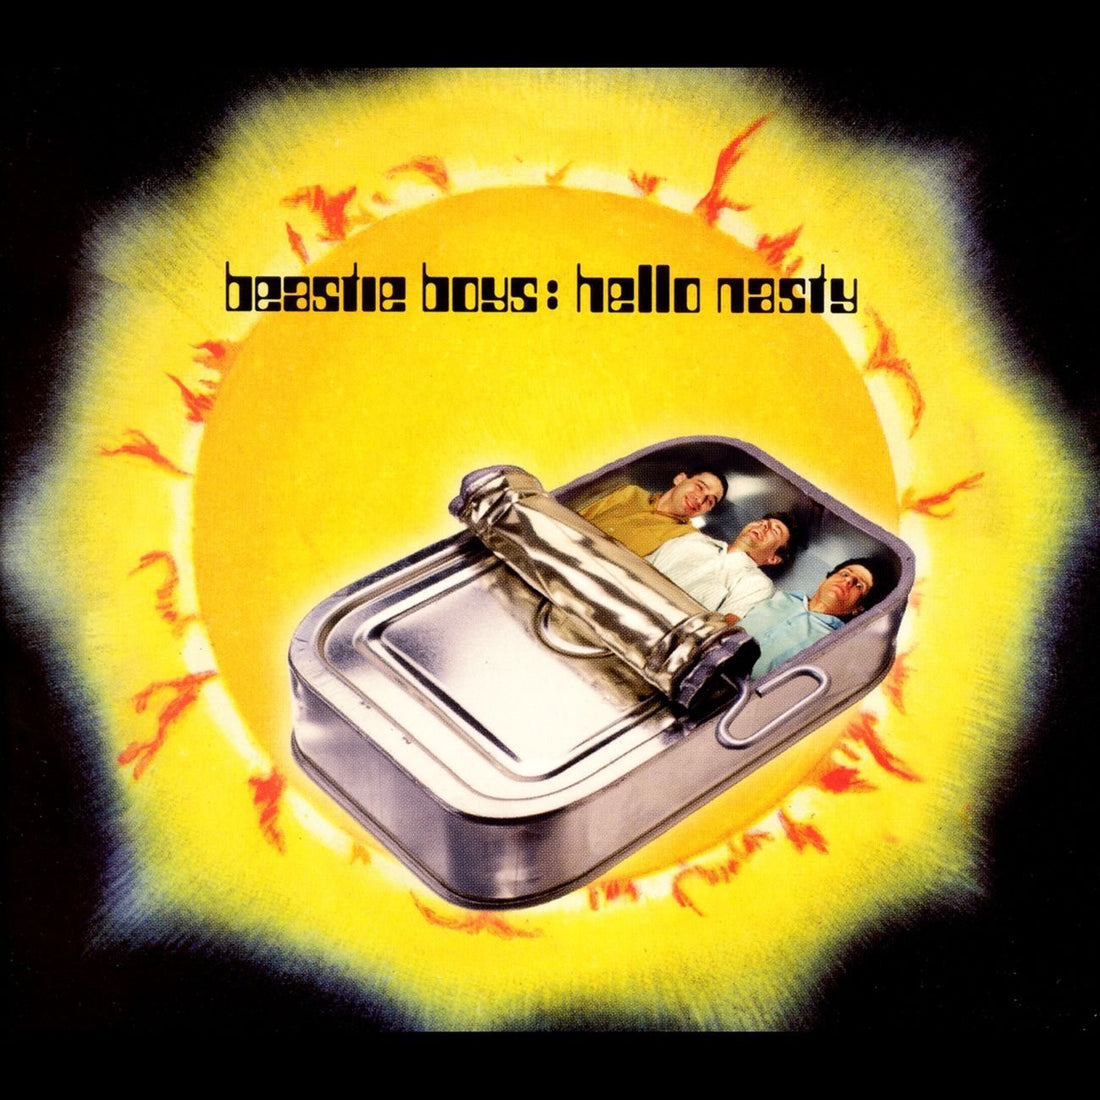 Beastie Boys "Hello Nasty" 2xLP 180 Gram Vinyl